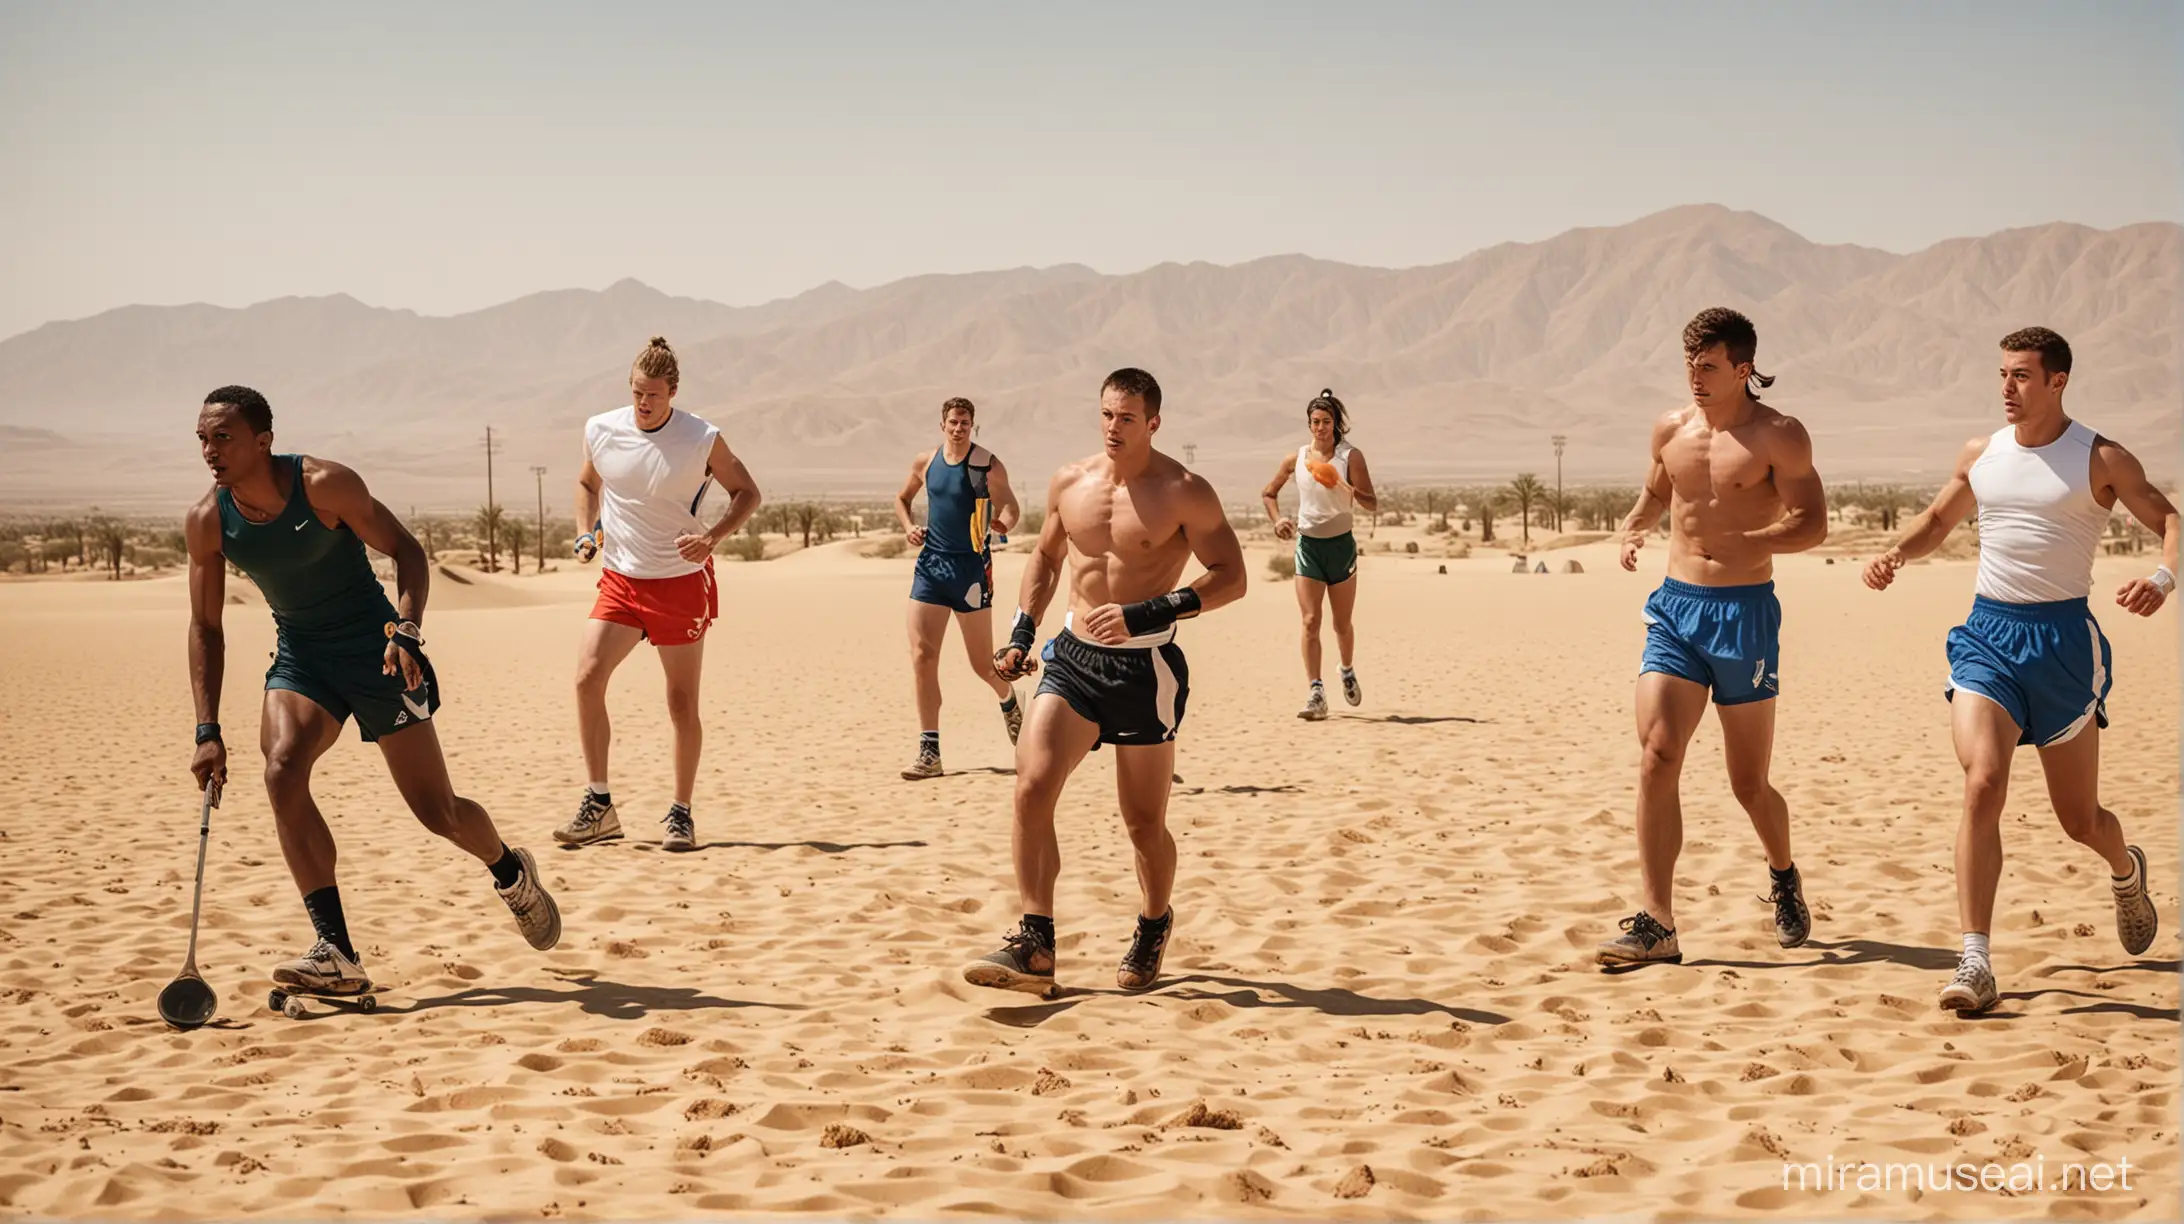 photo olympics athletes in a desert (a runner, a jumper, a cyclist, a skateboarder, a weightlifter, a rawer, a boxer, a climber, a fencer)